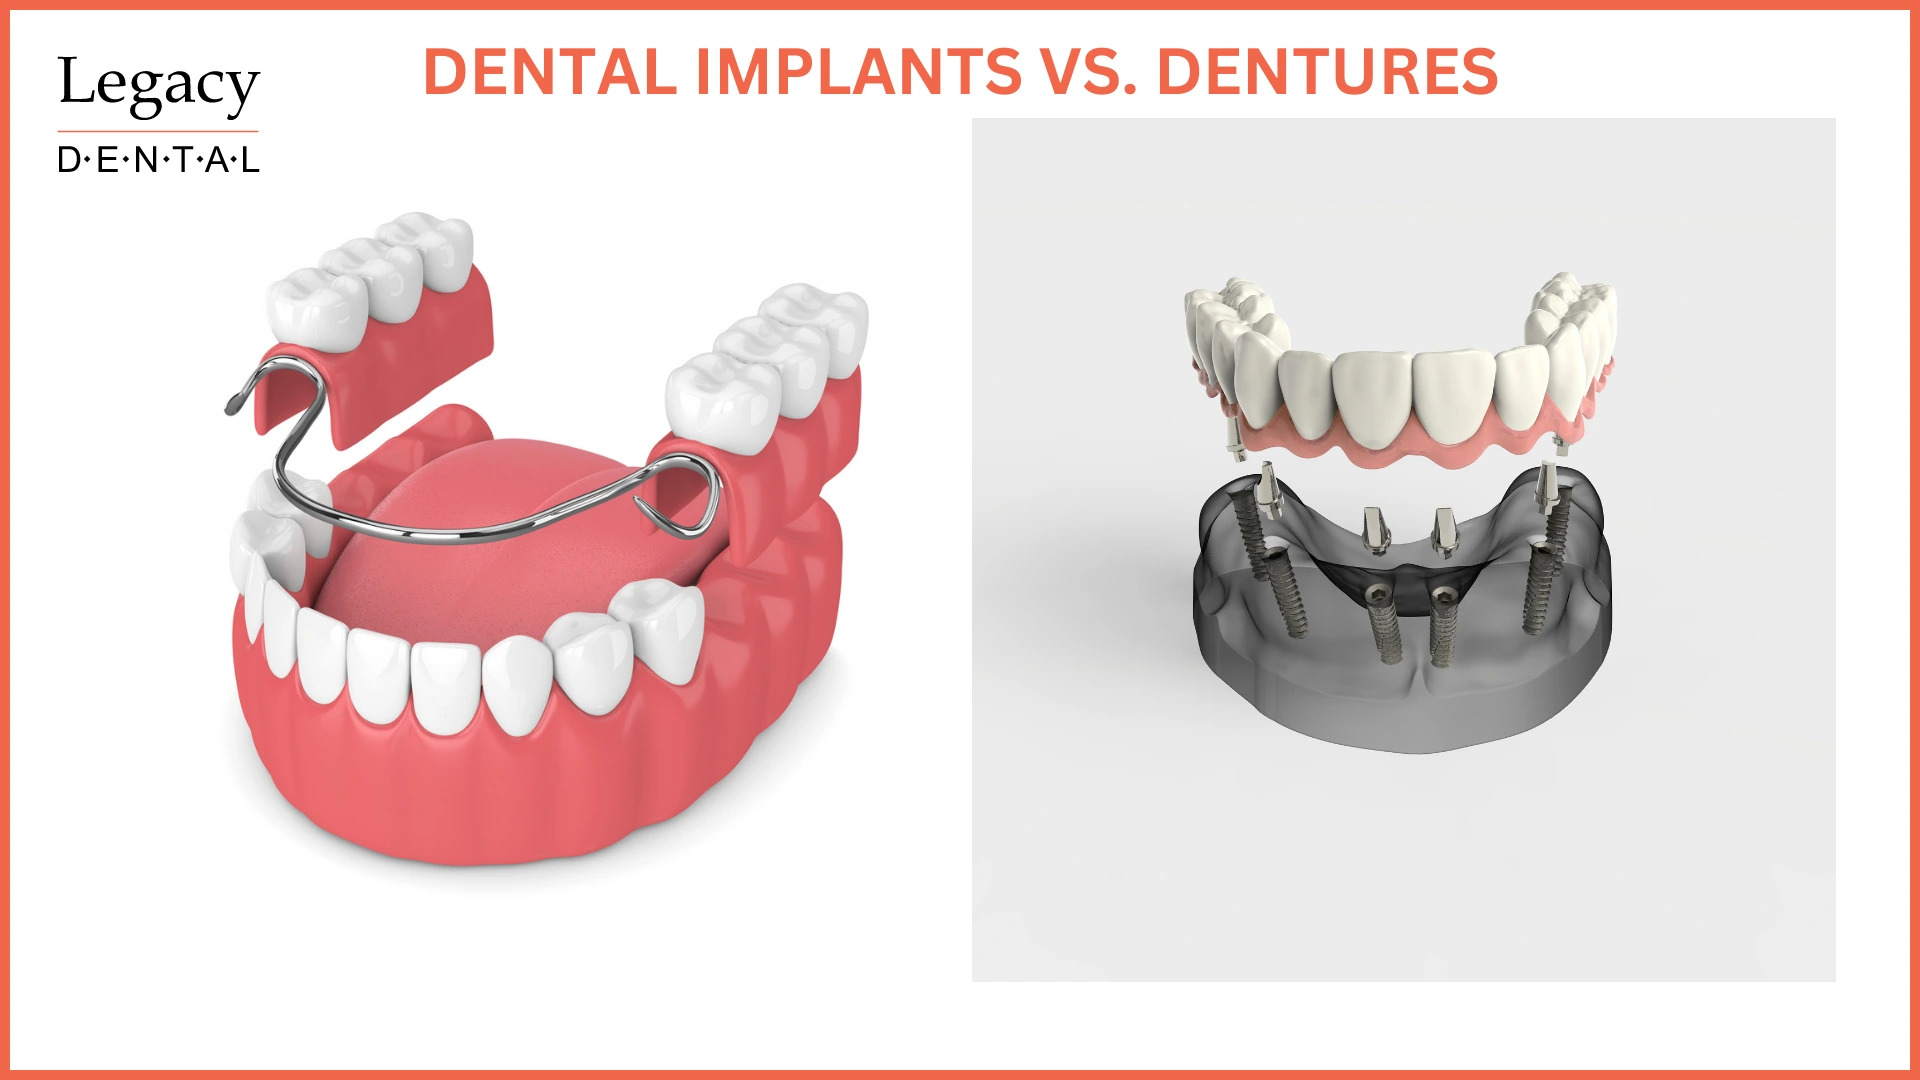 Dental implants VS. dentures